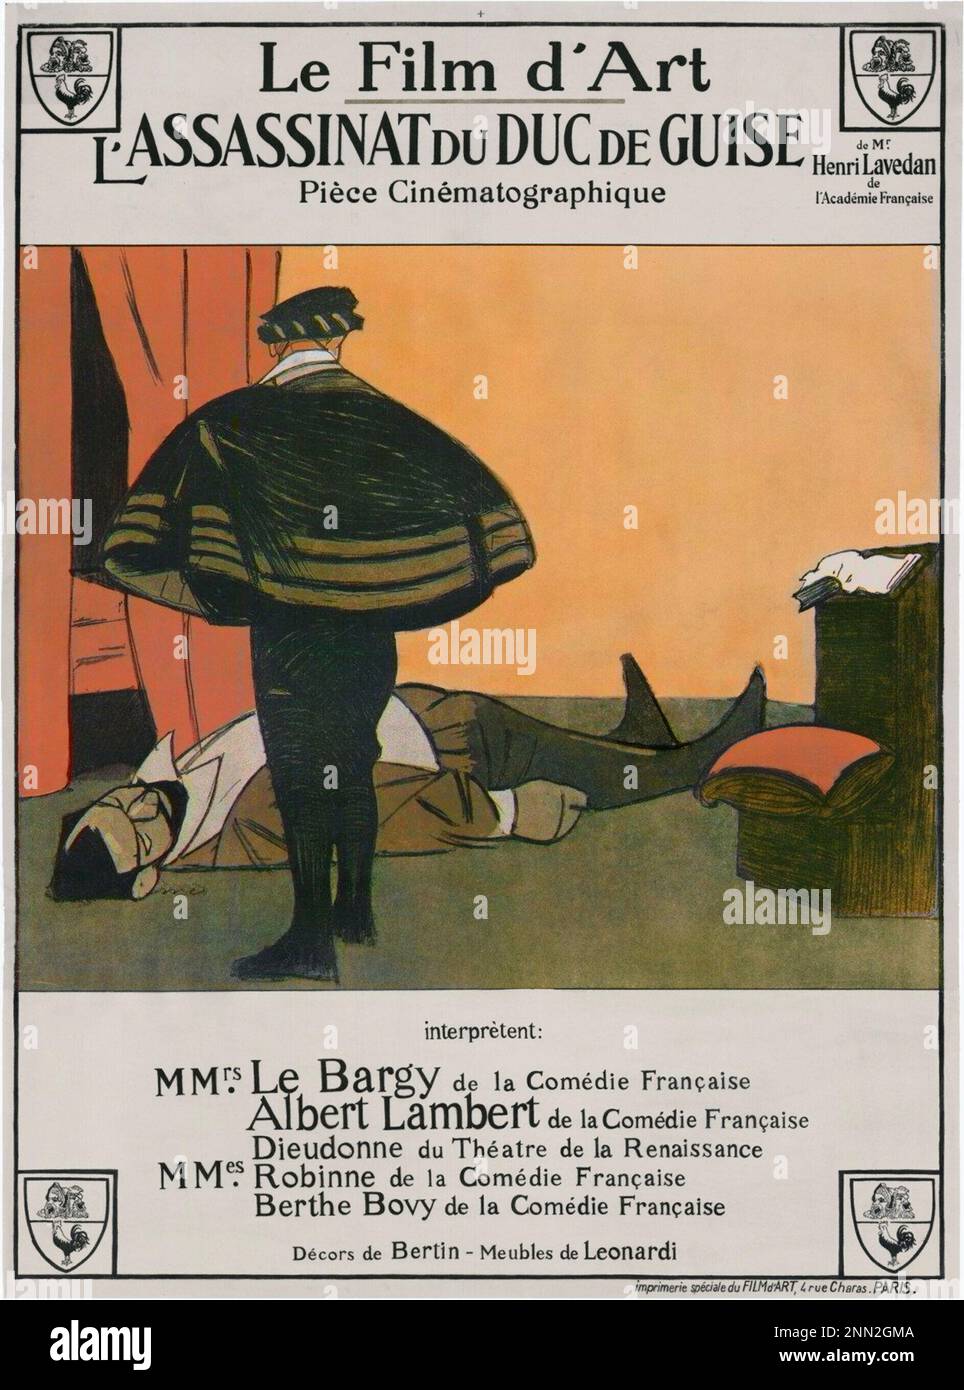 L'ASSASSINAT DU DUC DE GUISE (1908), DIRETTO DA ANDRÉ CALMETTES E CHARLES LE BARGY. Cartel de 'l'ASSASSINAT DU DUC DE GUISE' (El asesinato del duque de Guise), una película de 'le Film d'Art' 1908. Le Film d'Art Credit: Le Film d'Art / Album Foto Stock